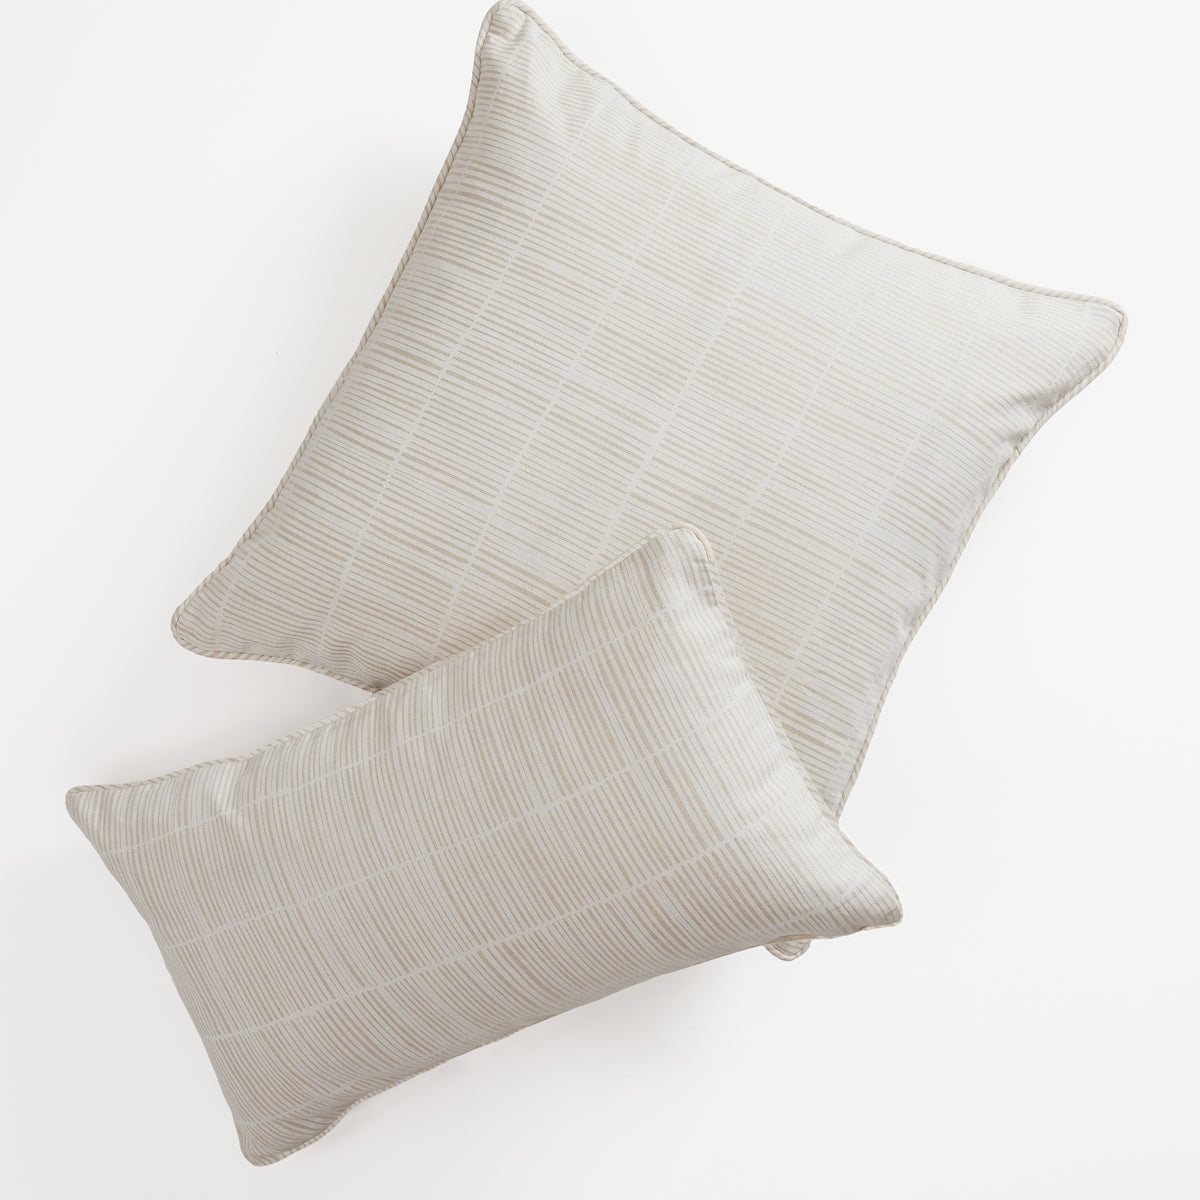 Cabana Belgian Linen Pillow